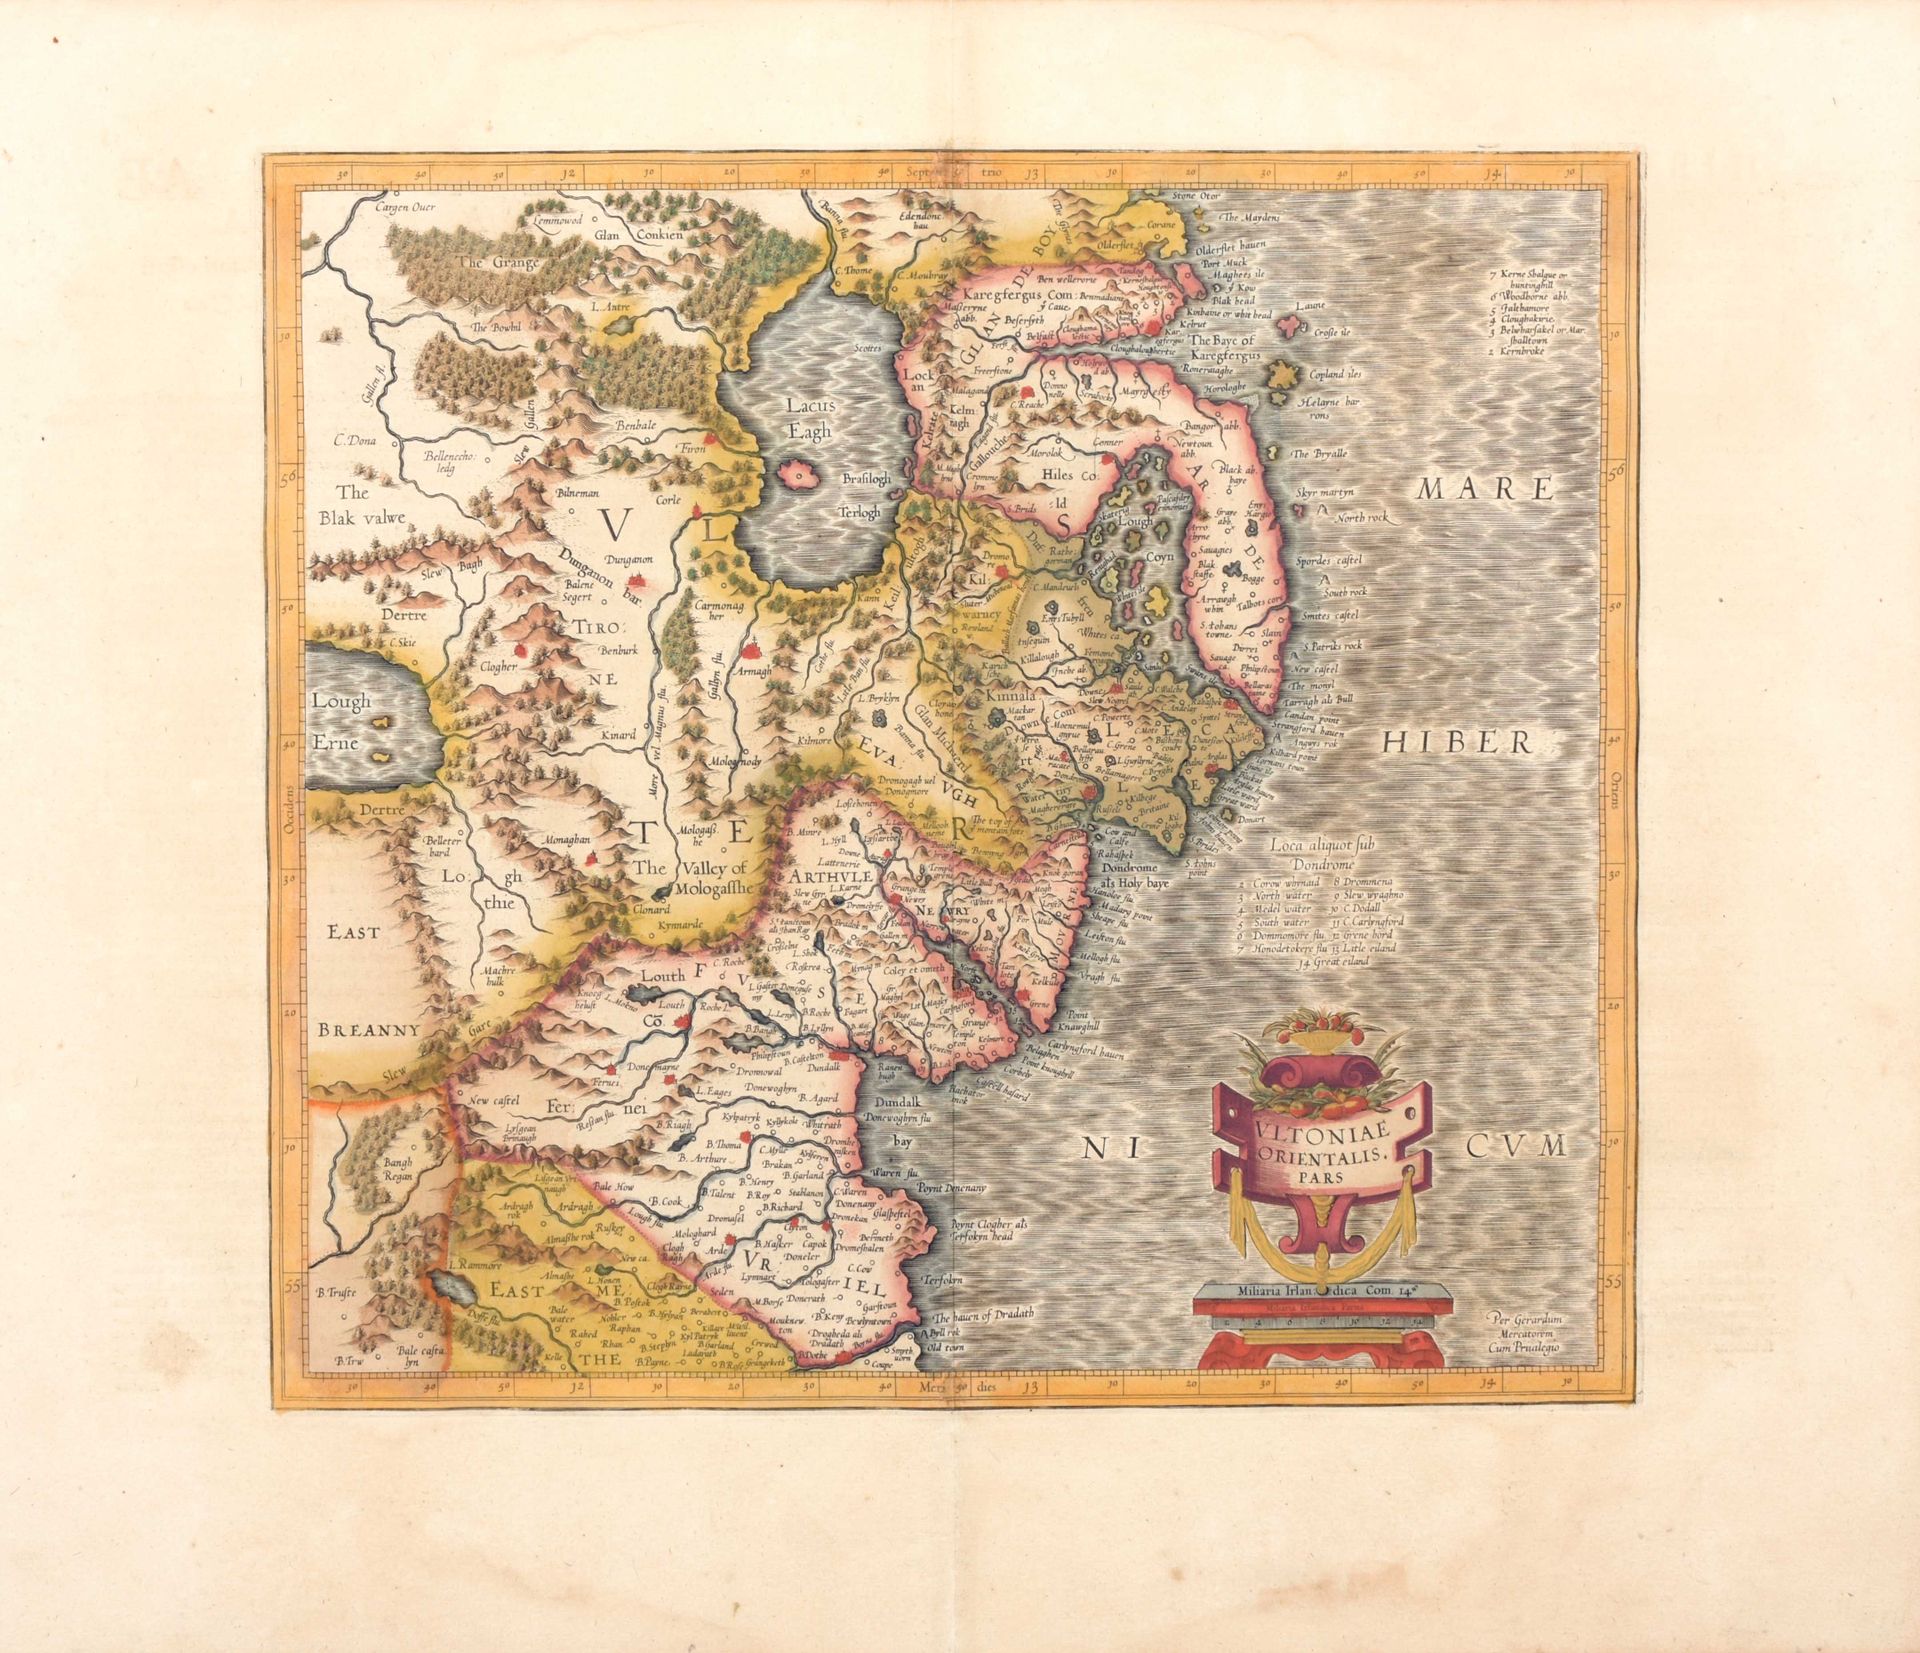 [NORTHERN IRELAND] Ultoniae Orientalis Pars

墨卡托的原版手绘地图（35 x 38厘米）。1600.路过的人

Va&hellip;